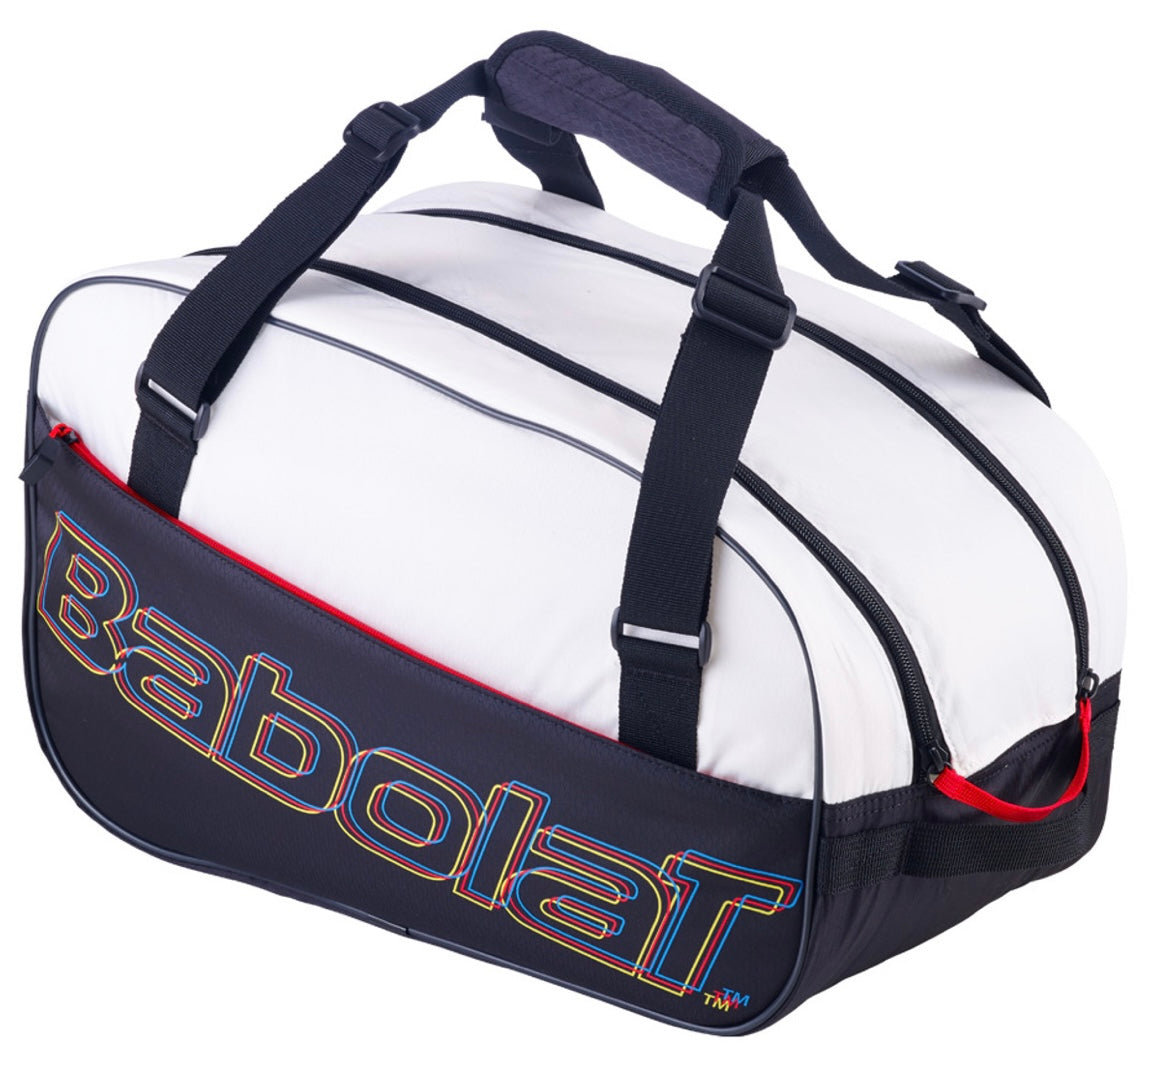 Babolat RH Padel Lite Bag (Black/White)